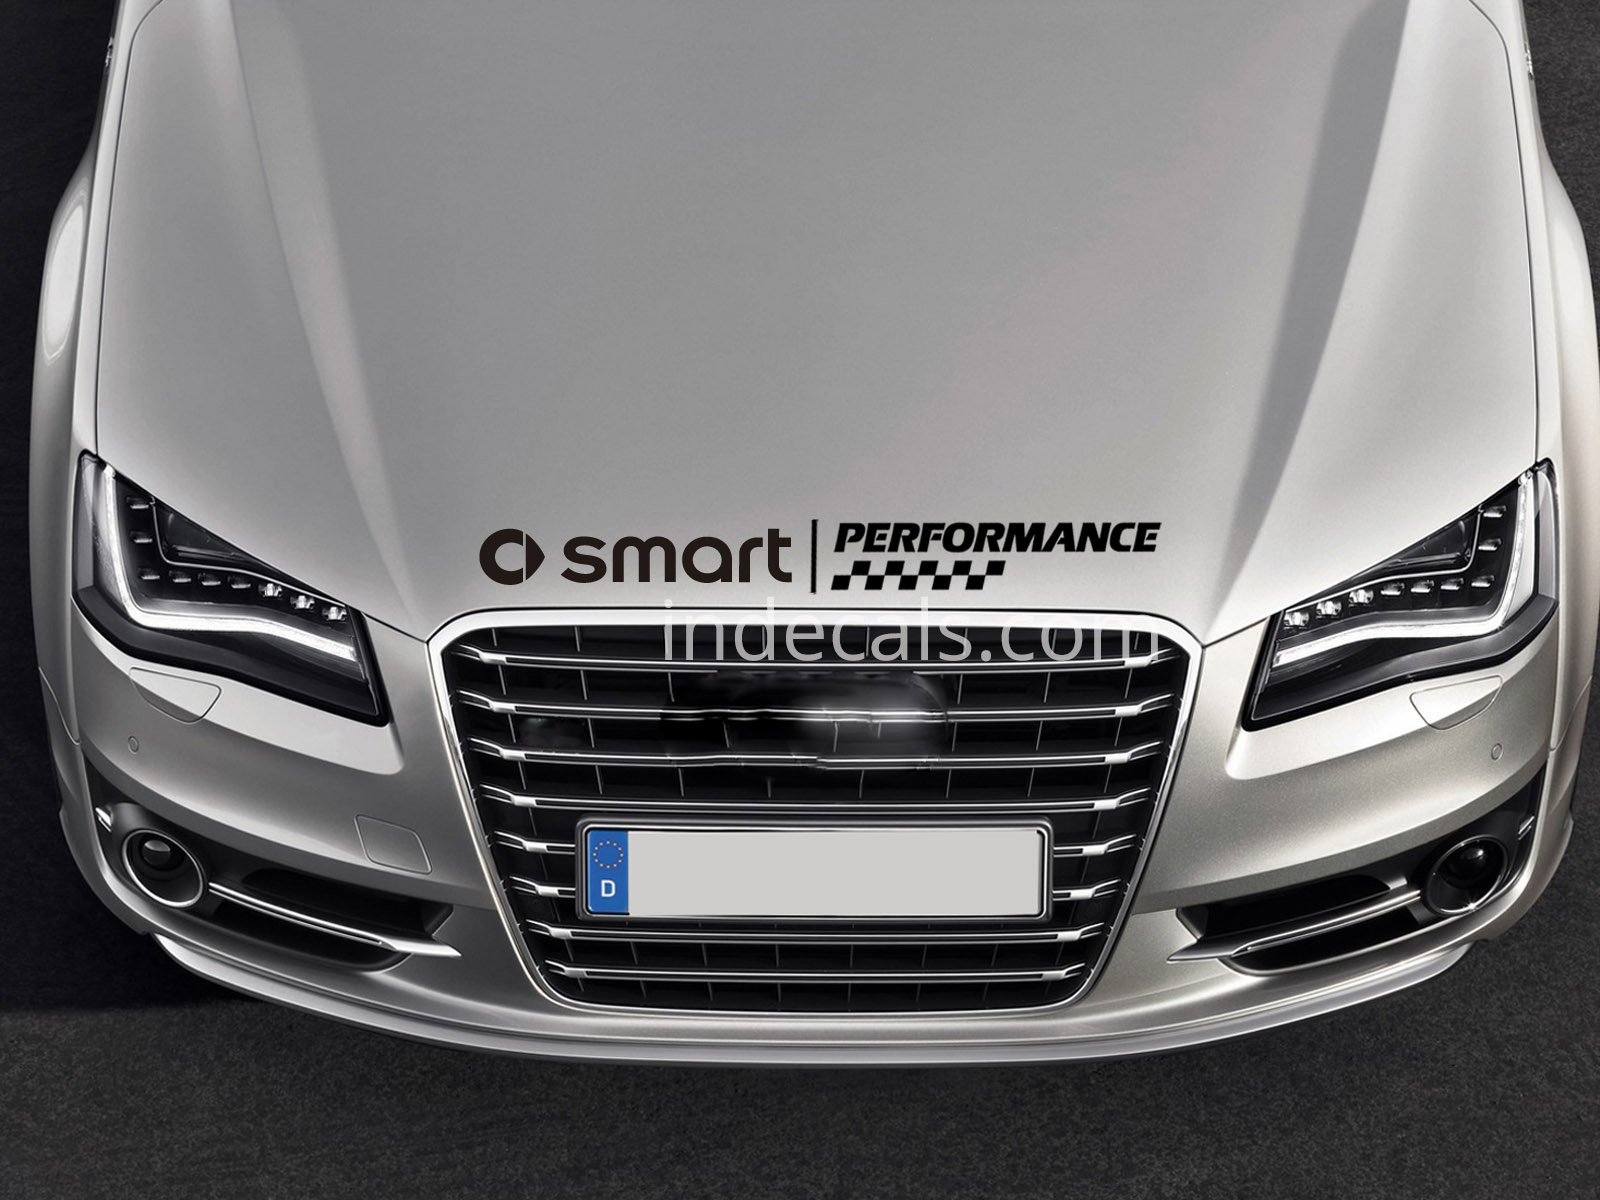 1 x Smart Performance Sticker for Bonnet - Black